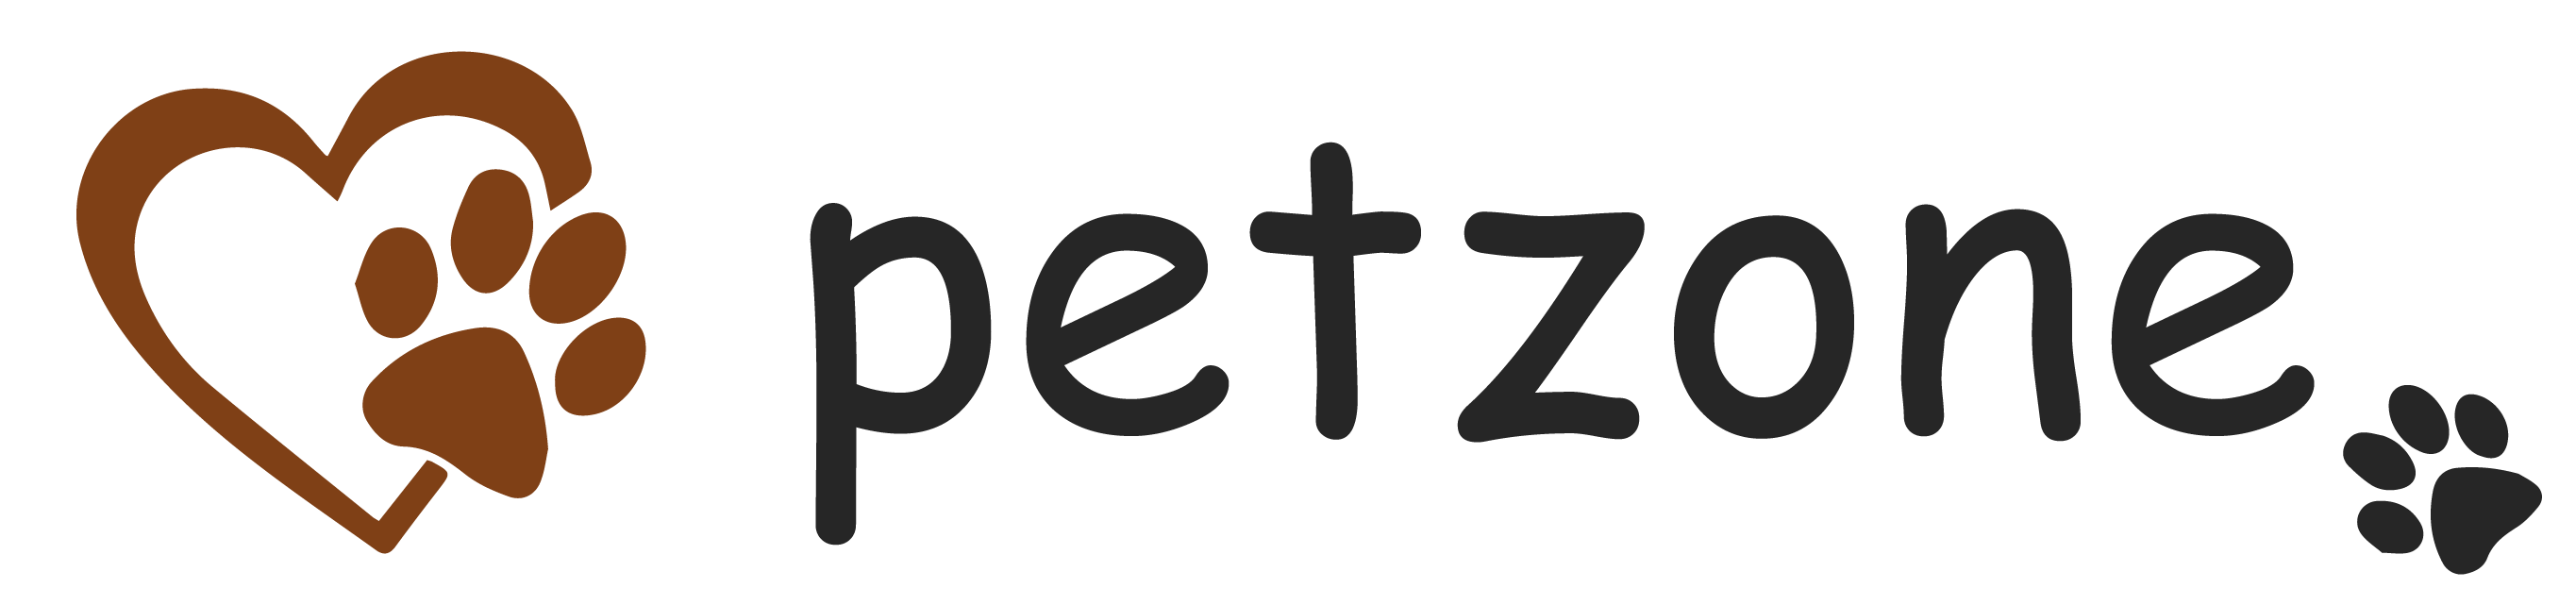 Petzone